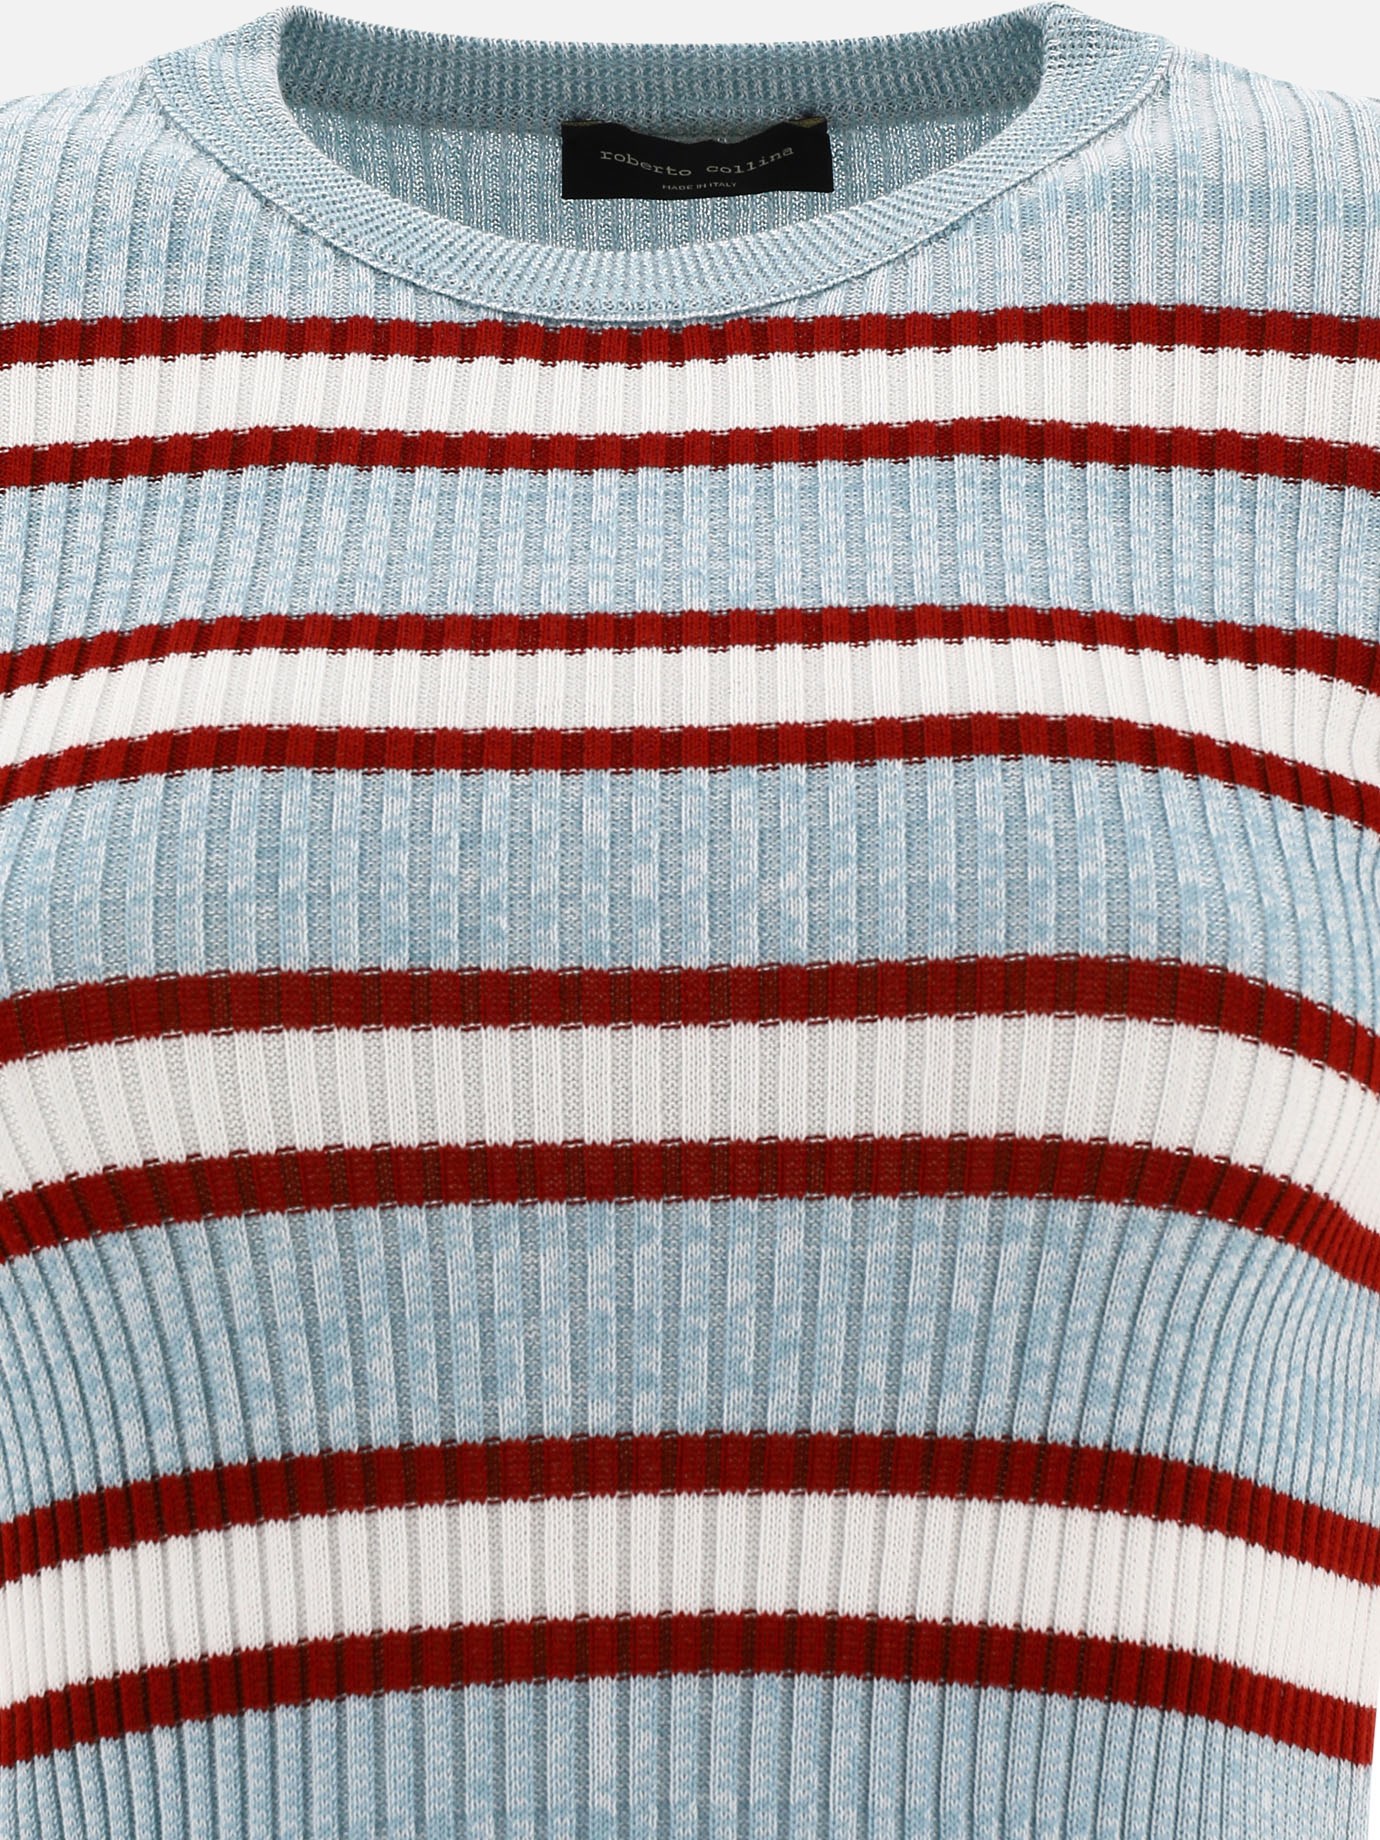 Striped sweater by Roberto Collina